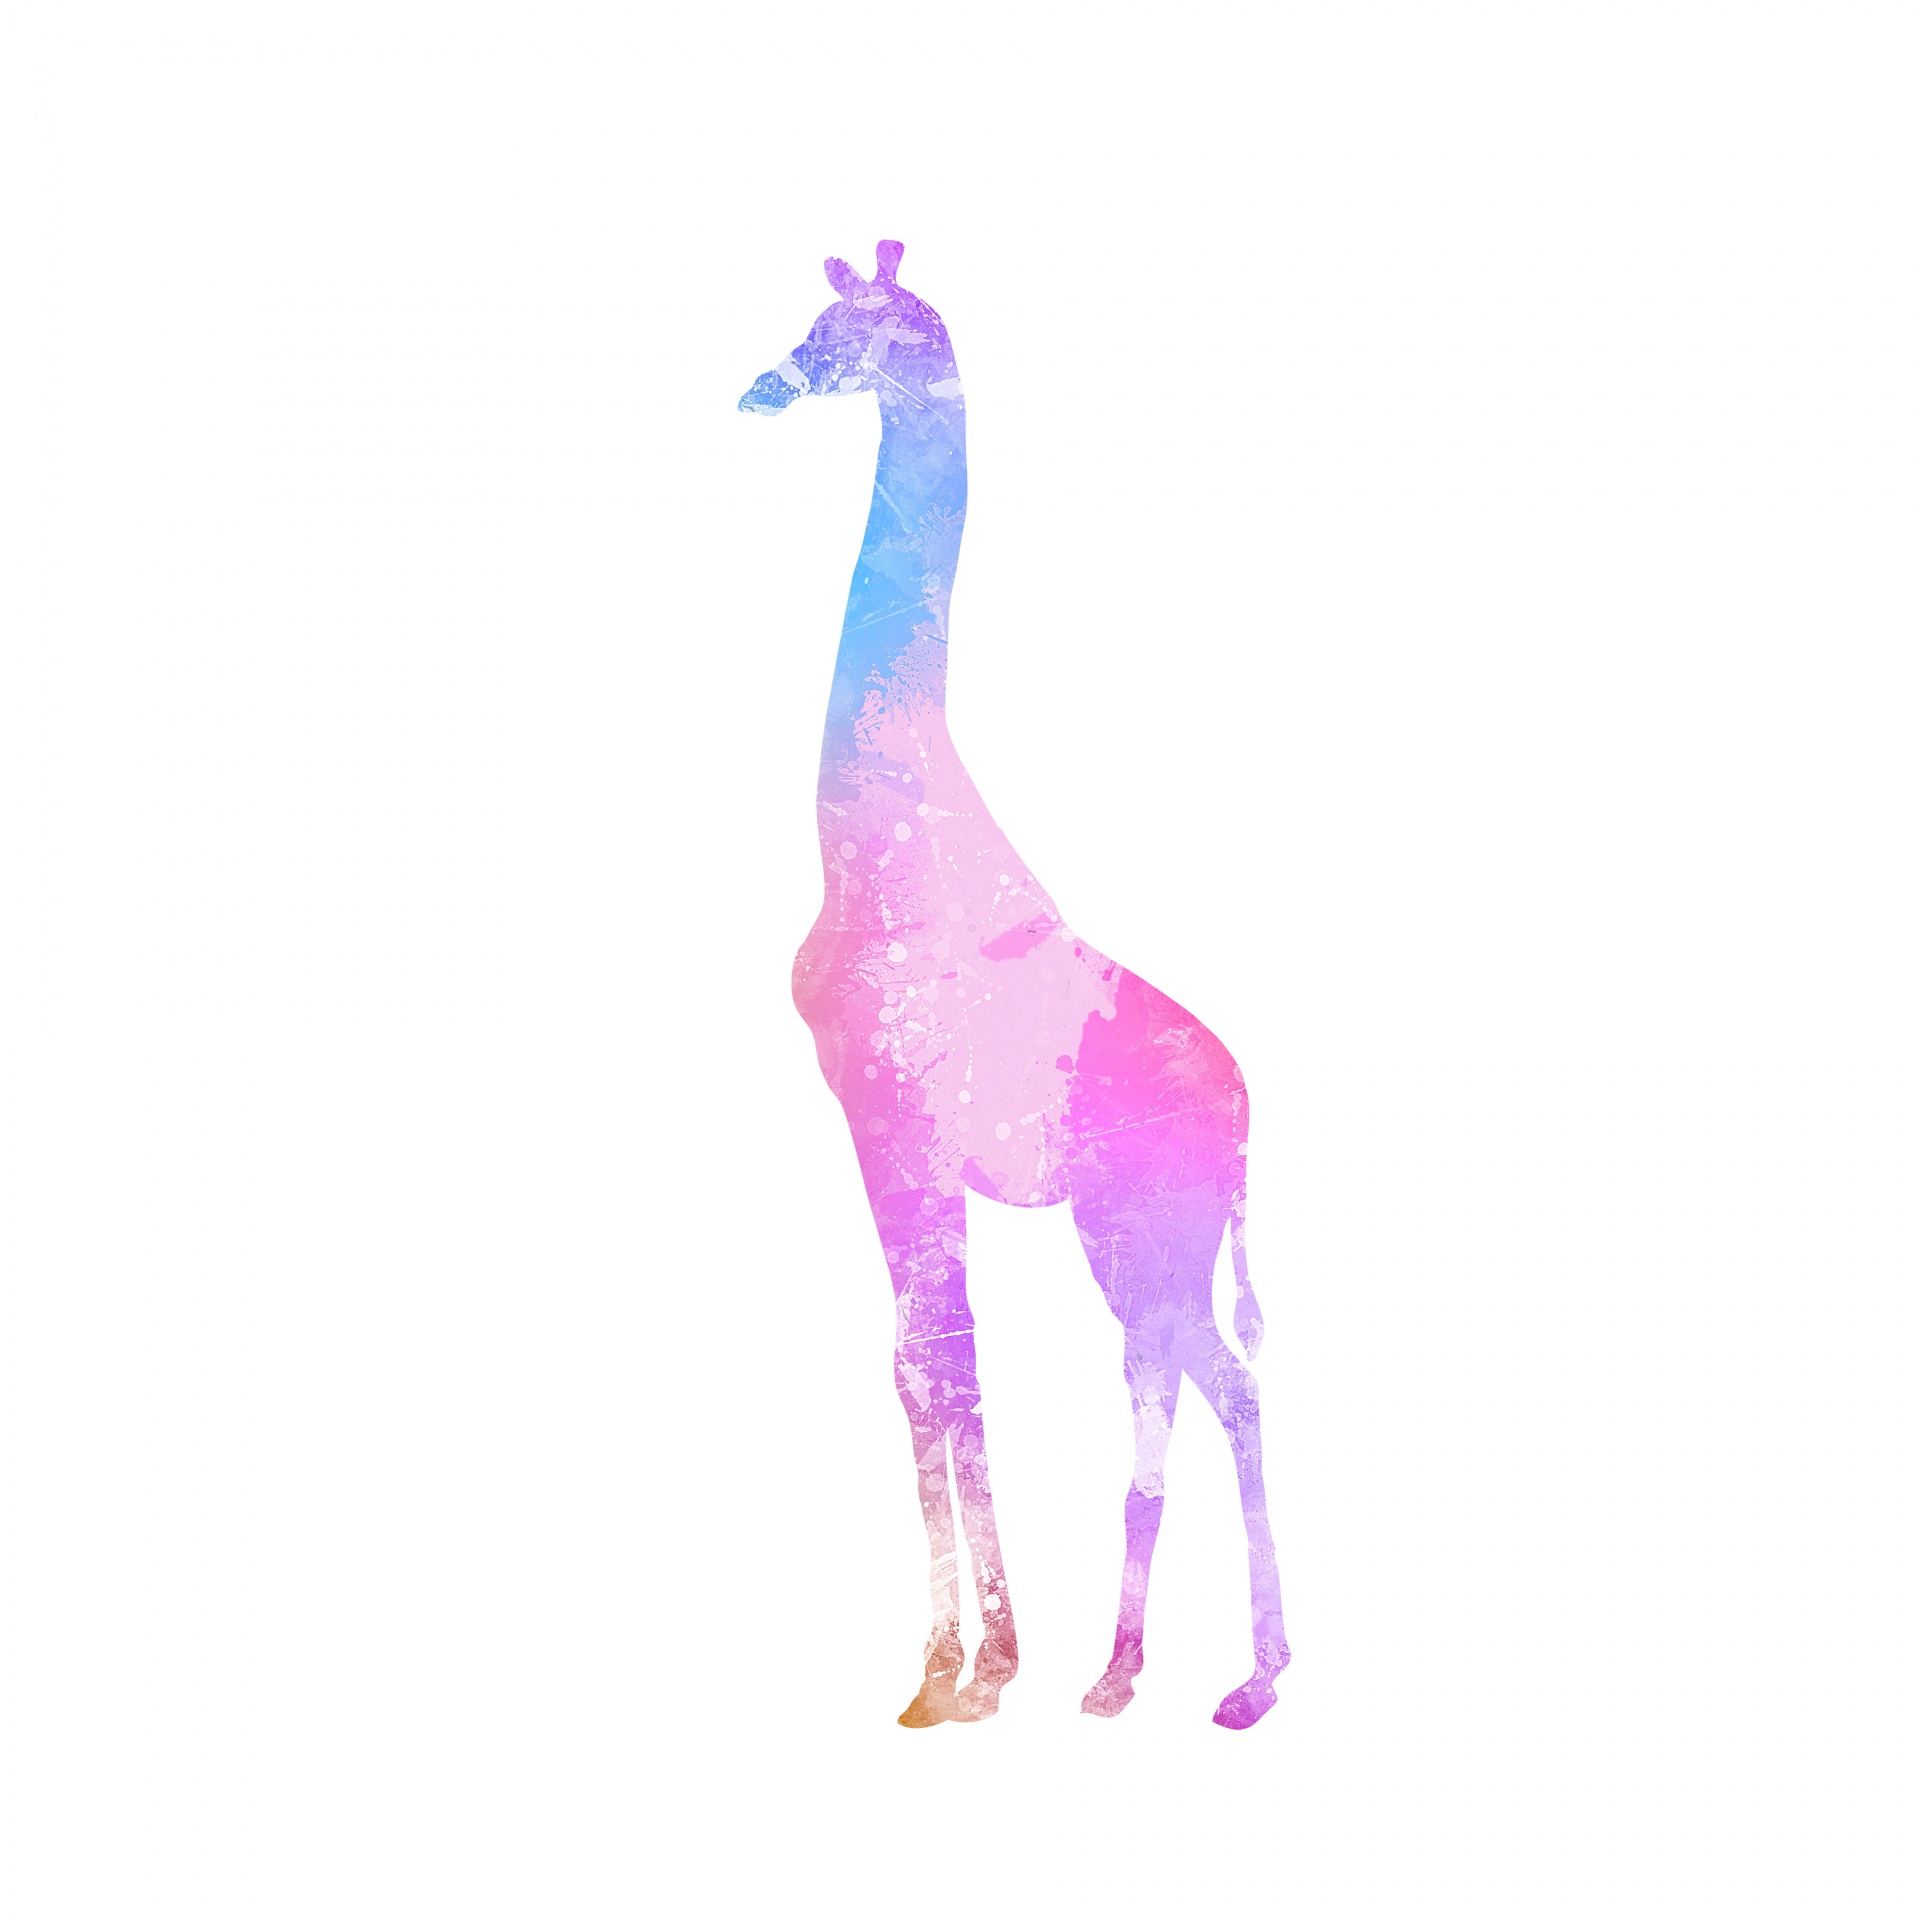 Giraffe Watercolor Painting Colors